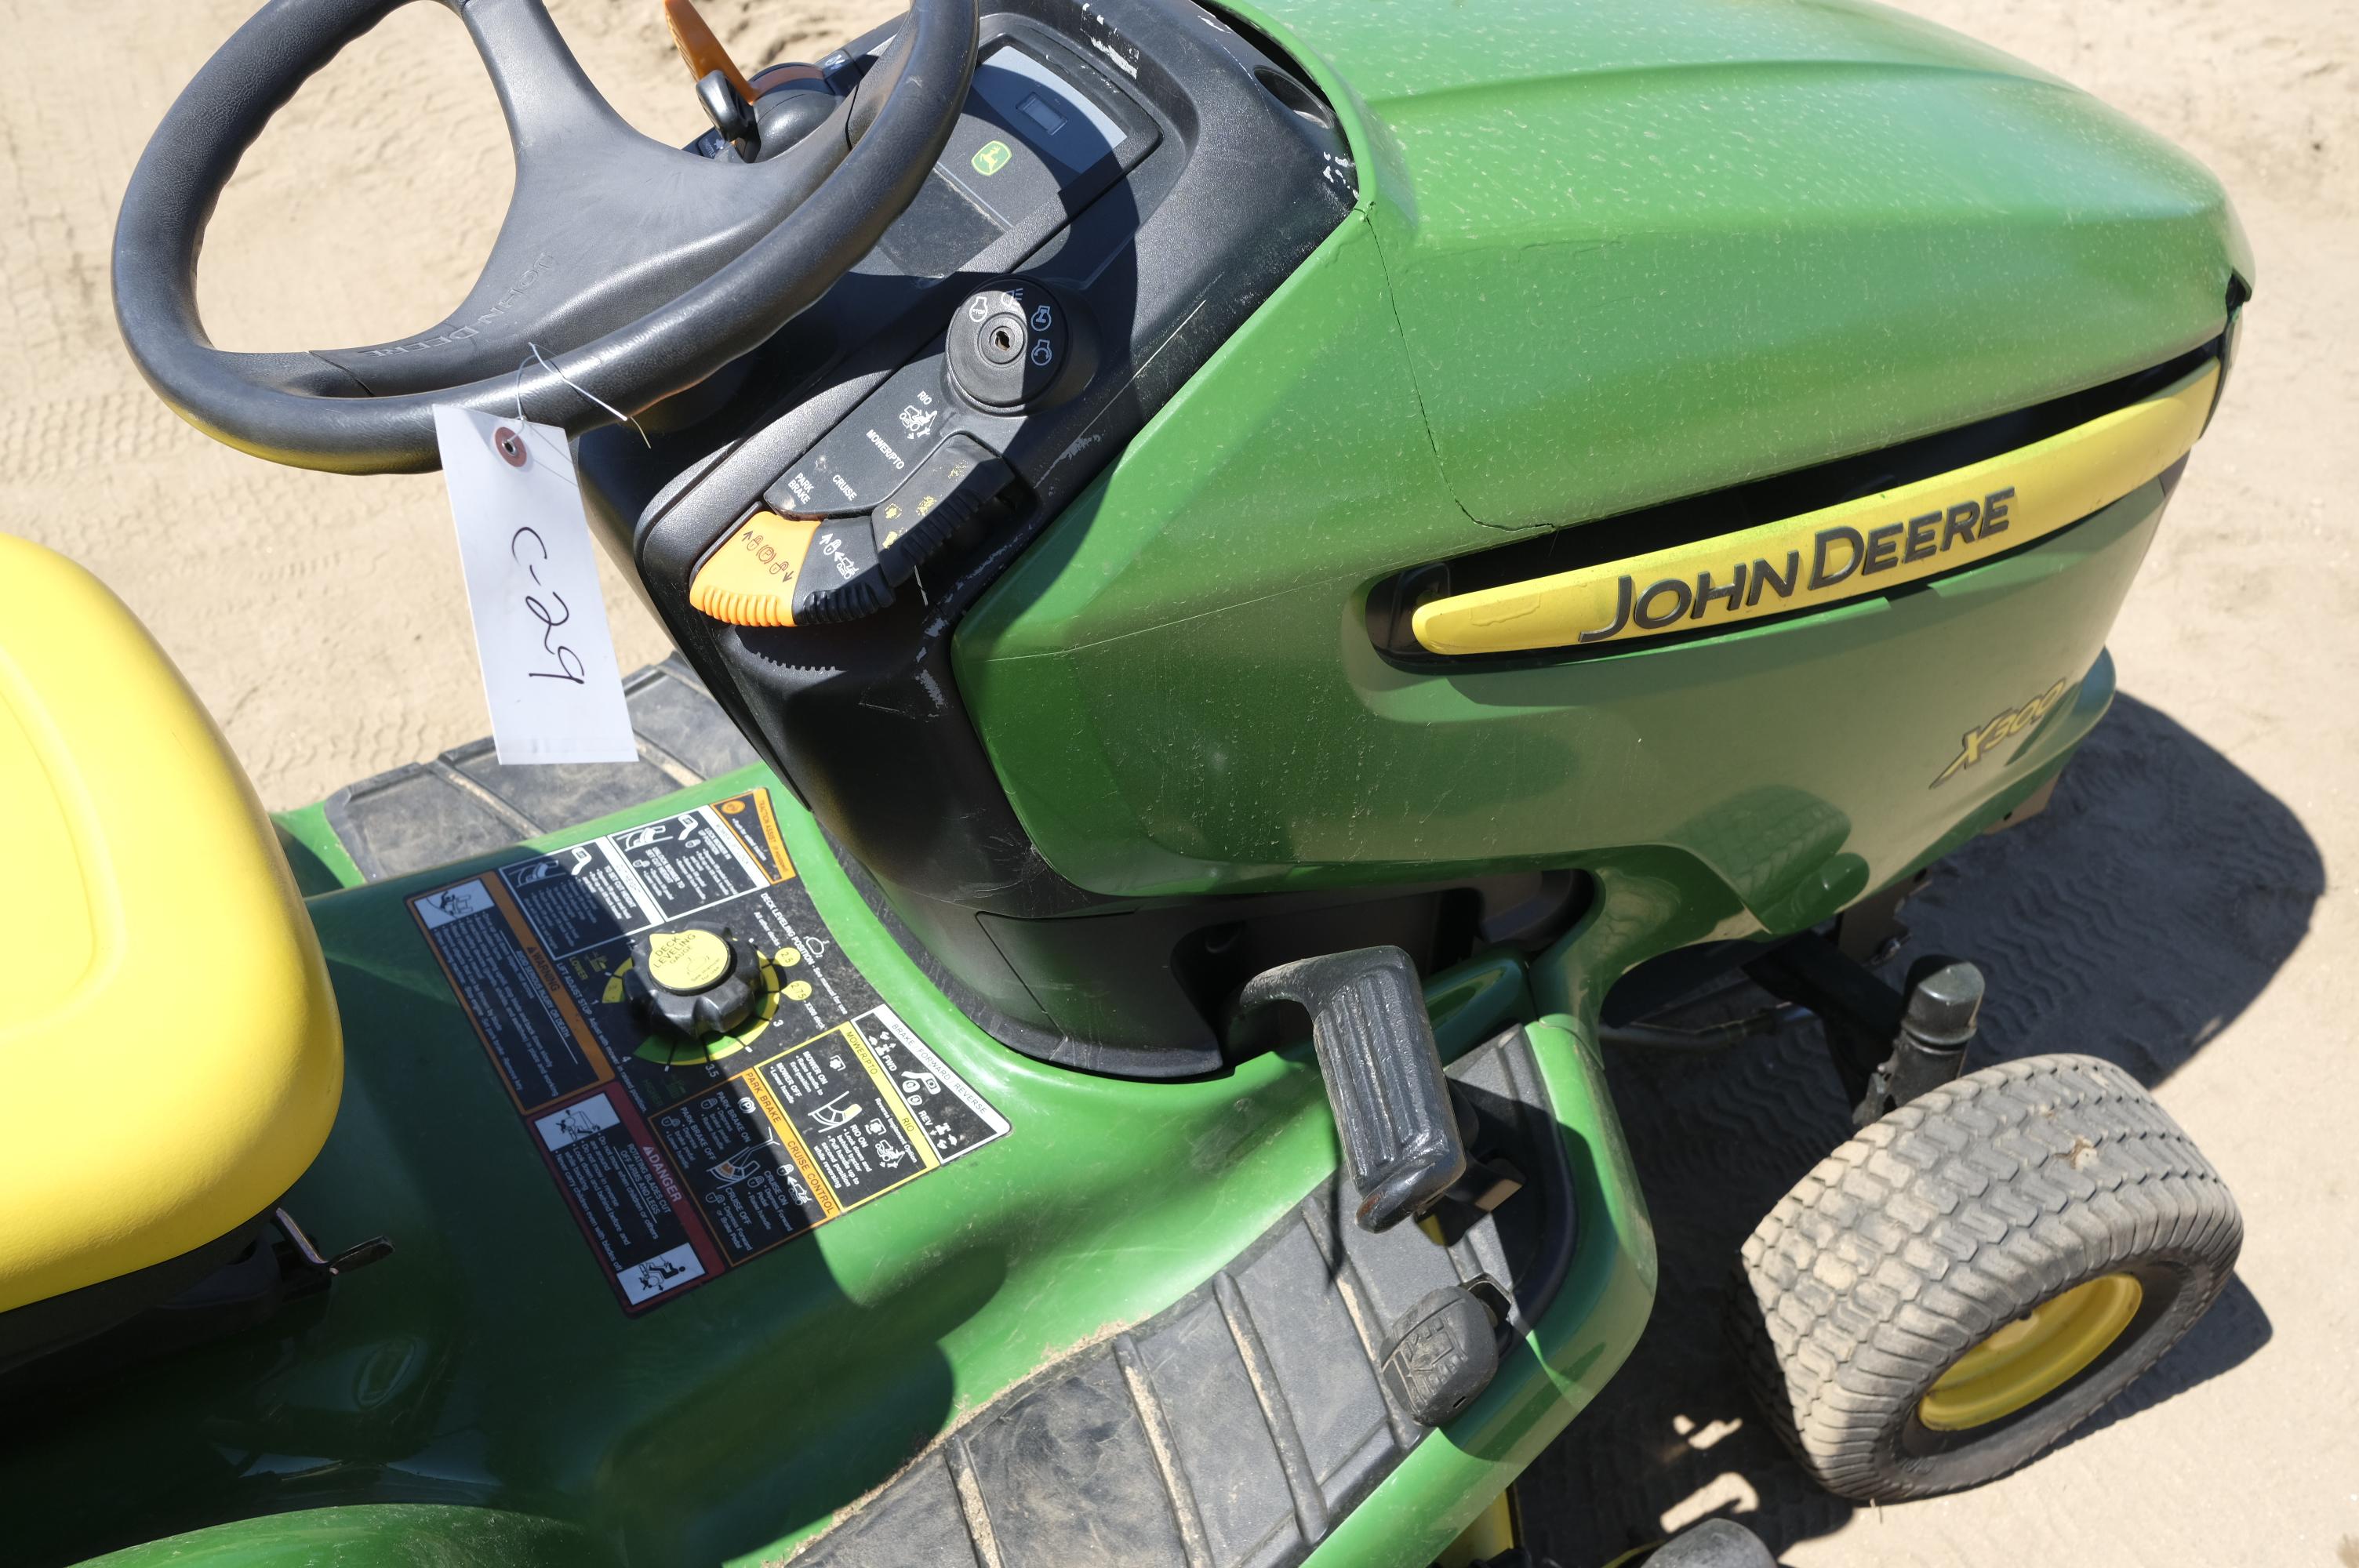 John Deere X300 riding lawn mower